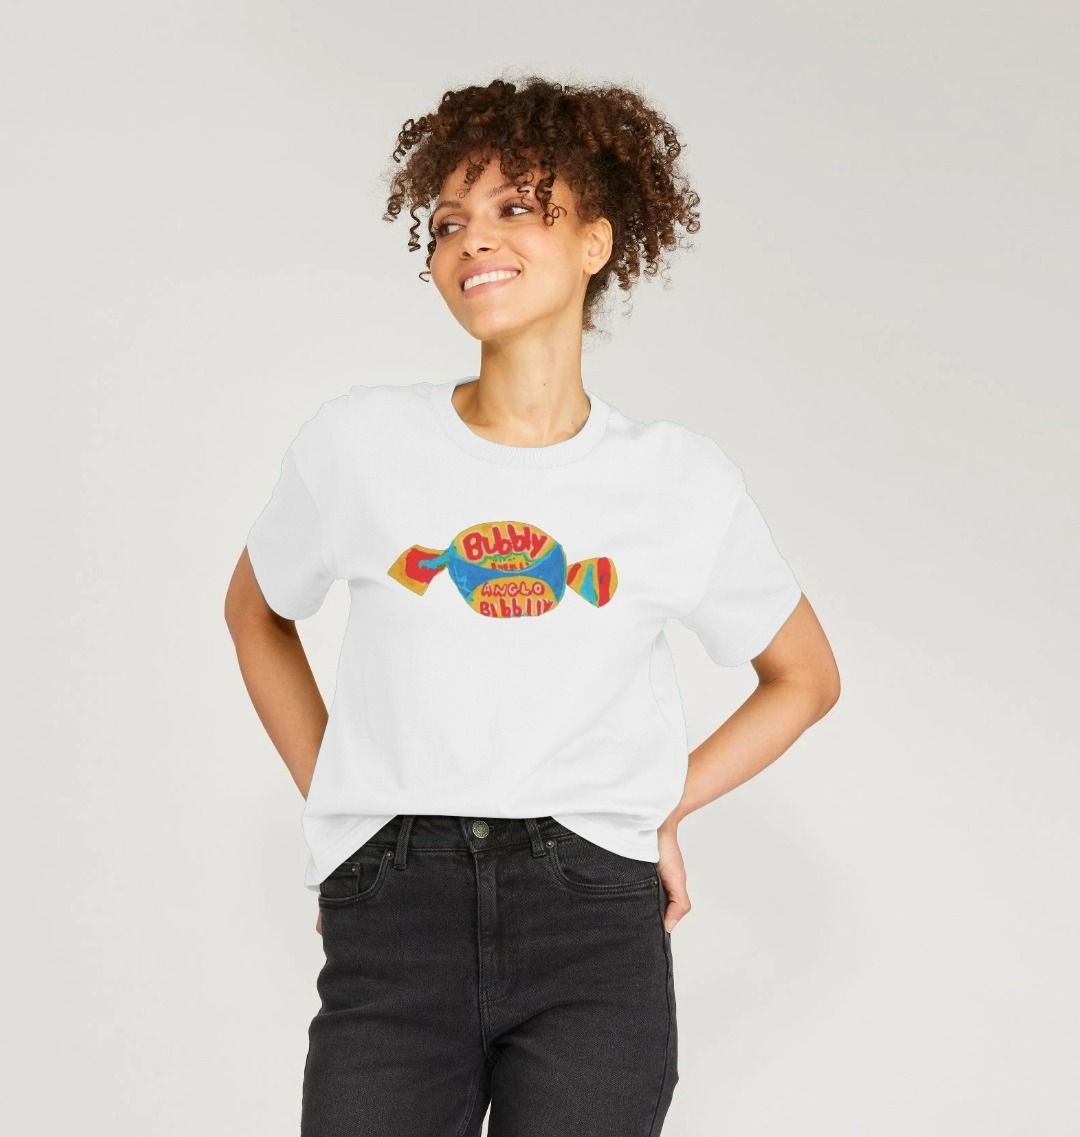 blowin' big bubbles women's boxee tee - Printed T-shirt - Sarah Millin